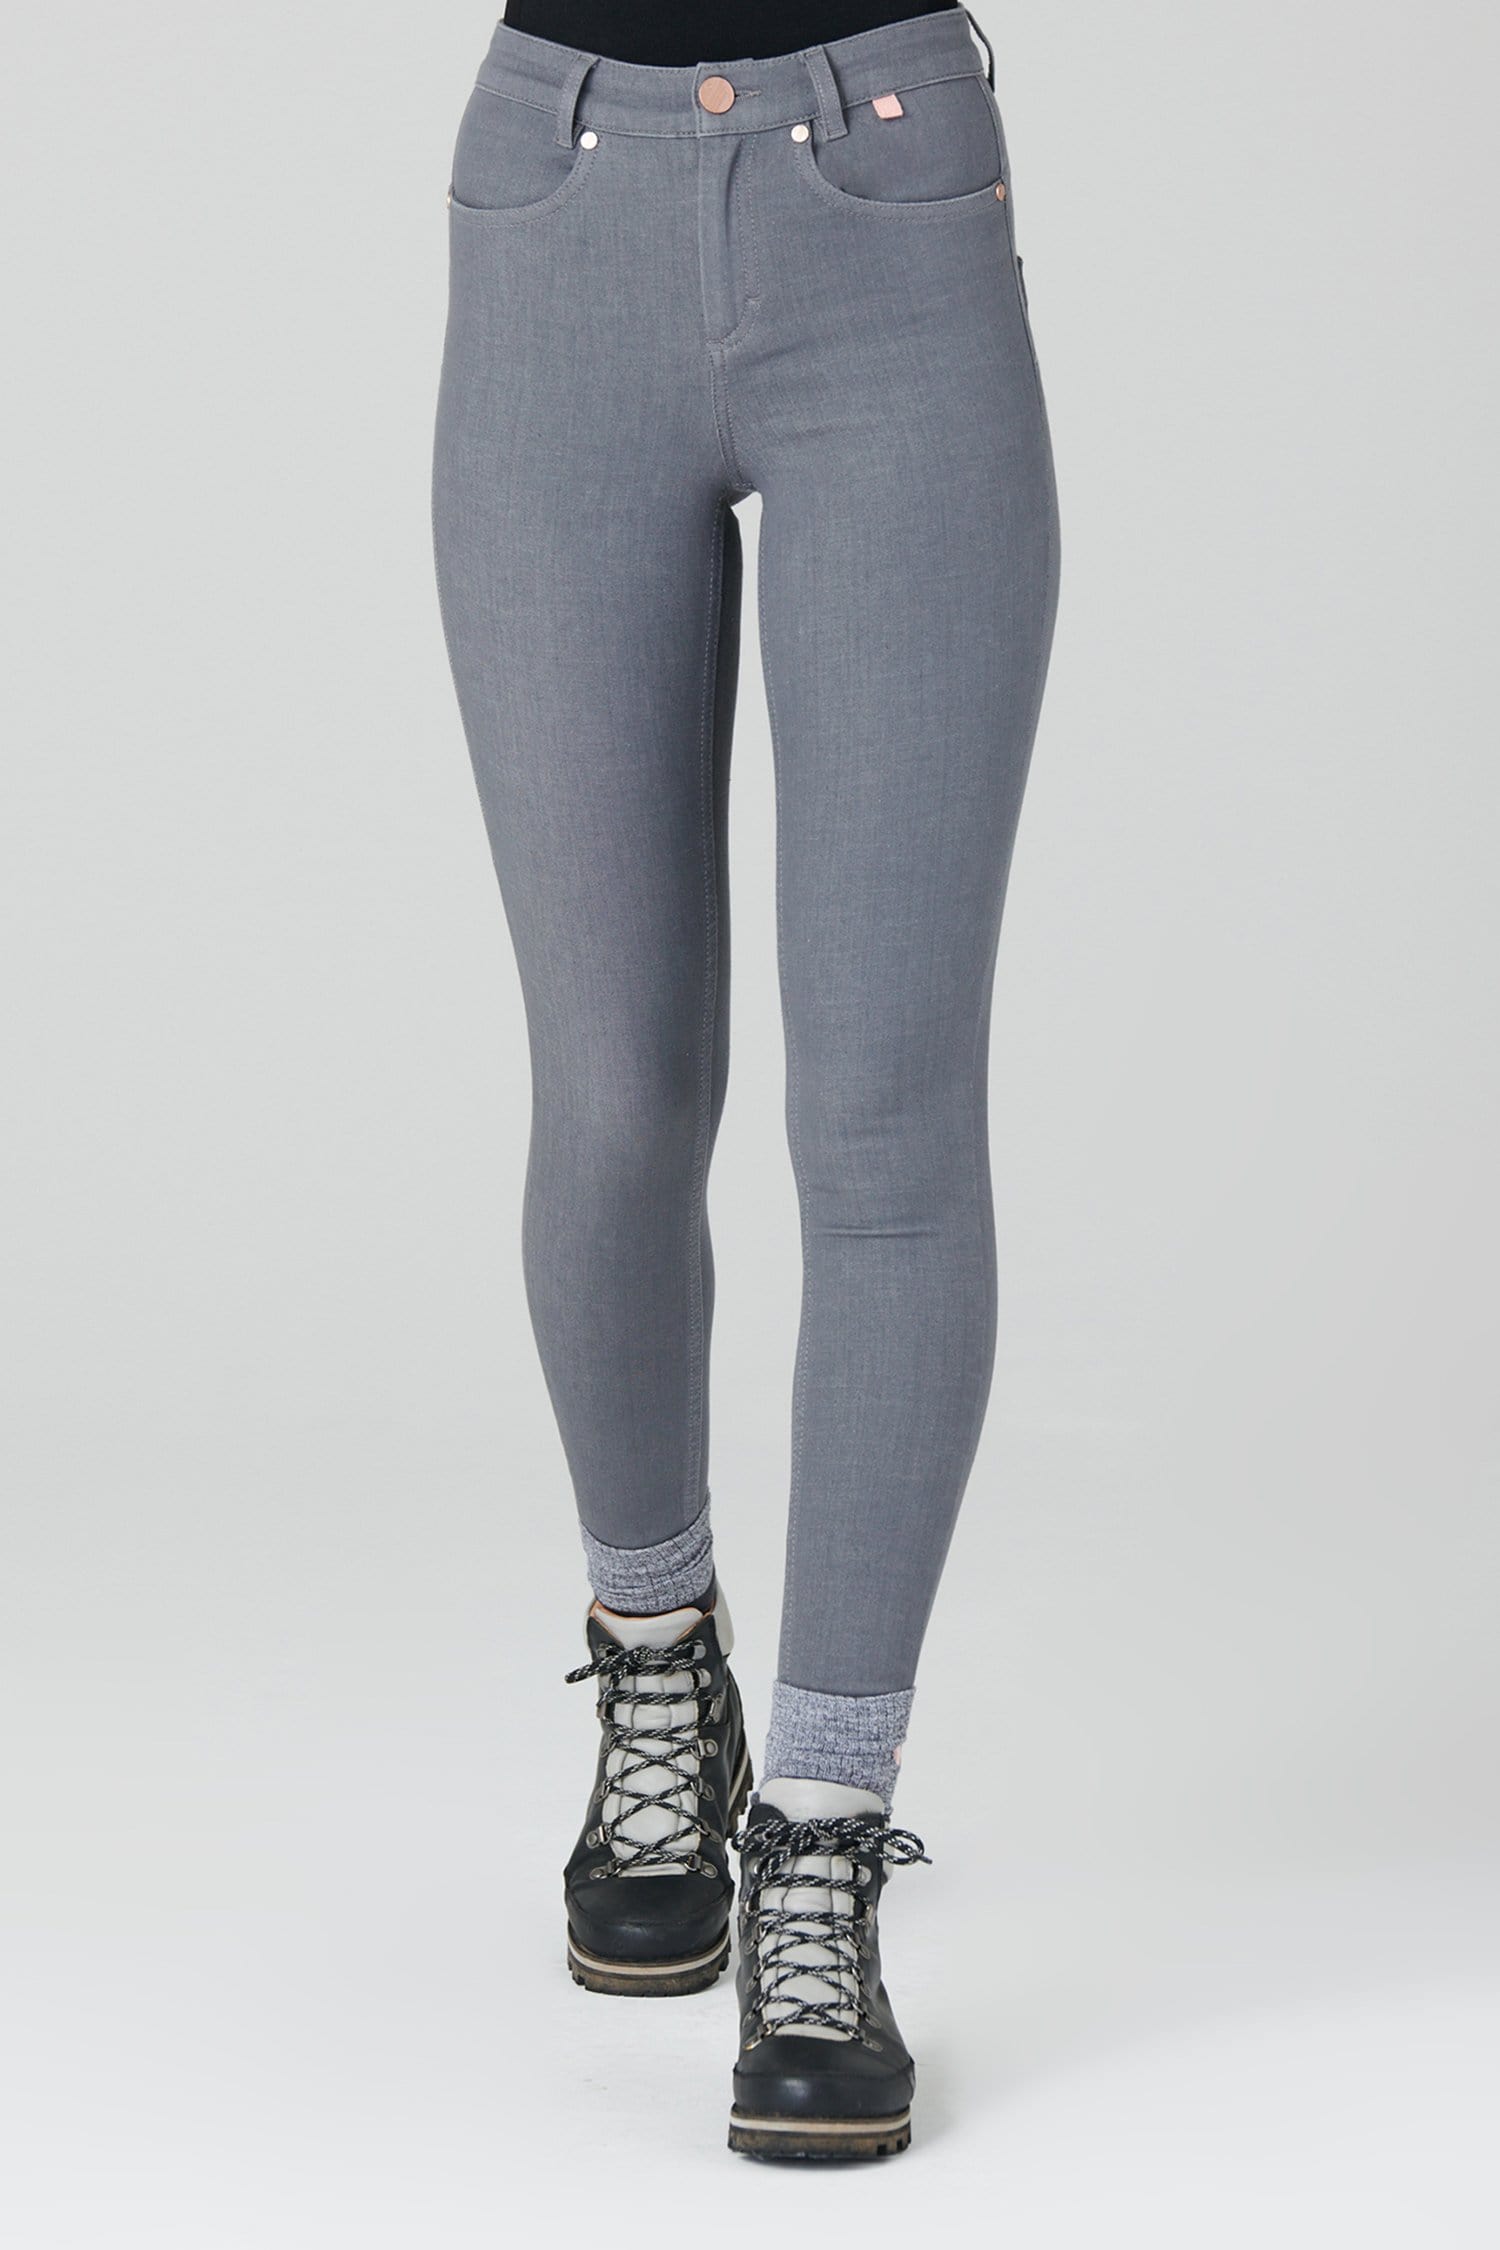 The Skinny Outdoor Jeans - Grey Denim - 24p / Uk6 - Womens - Acai Outdoorwear